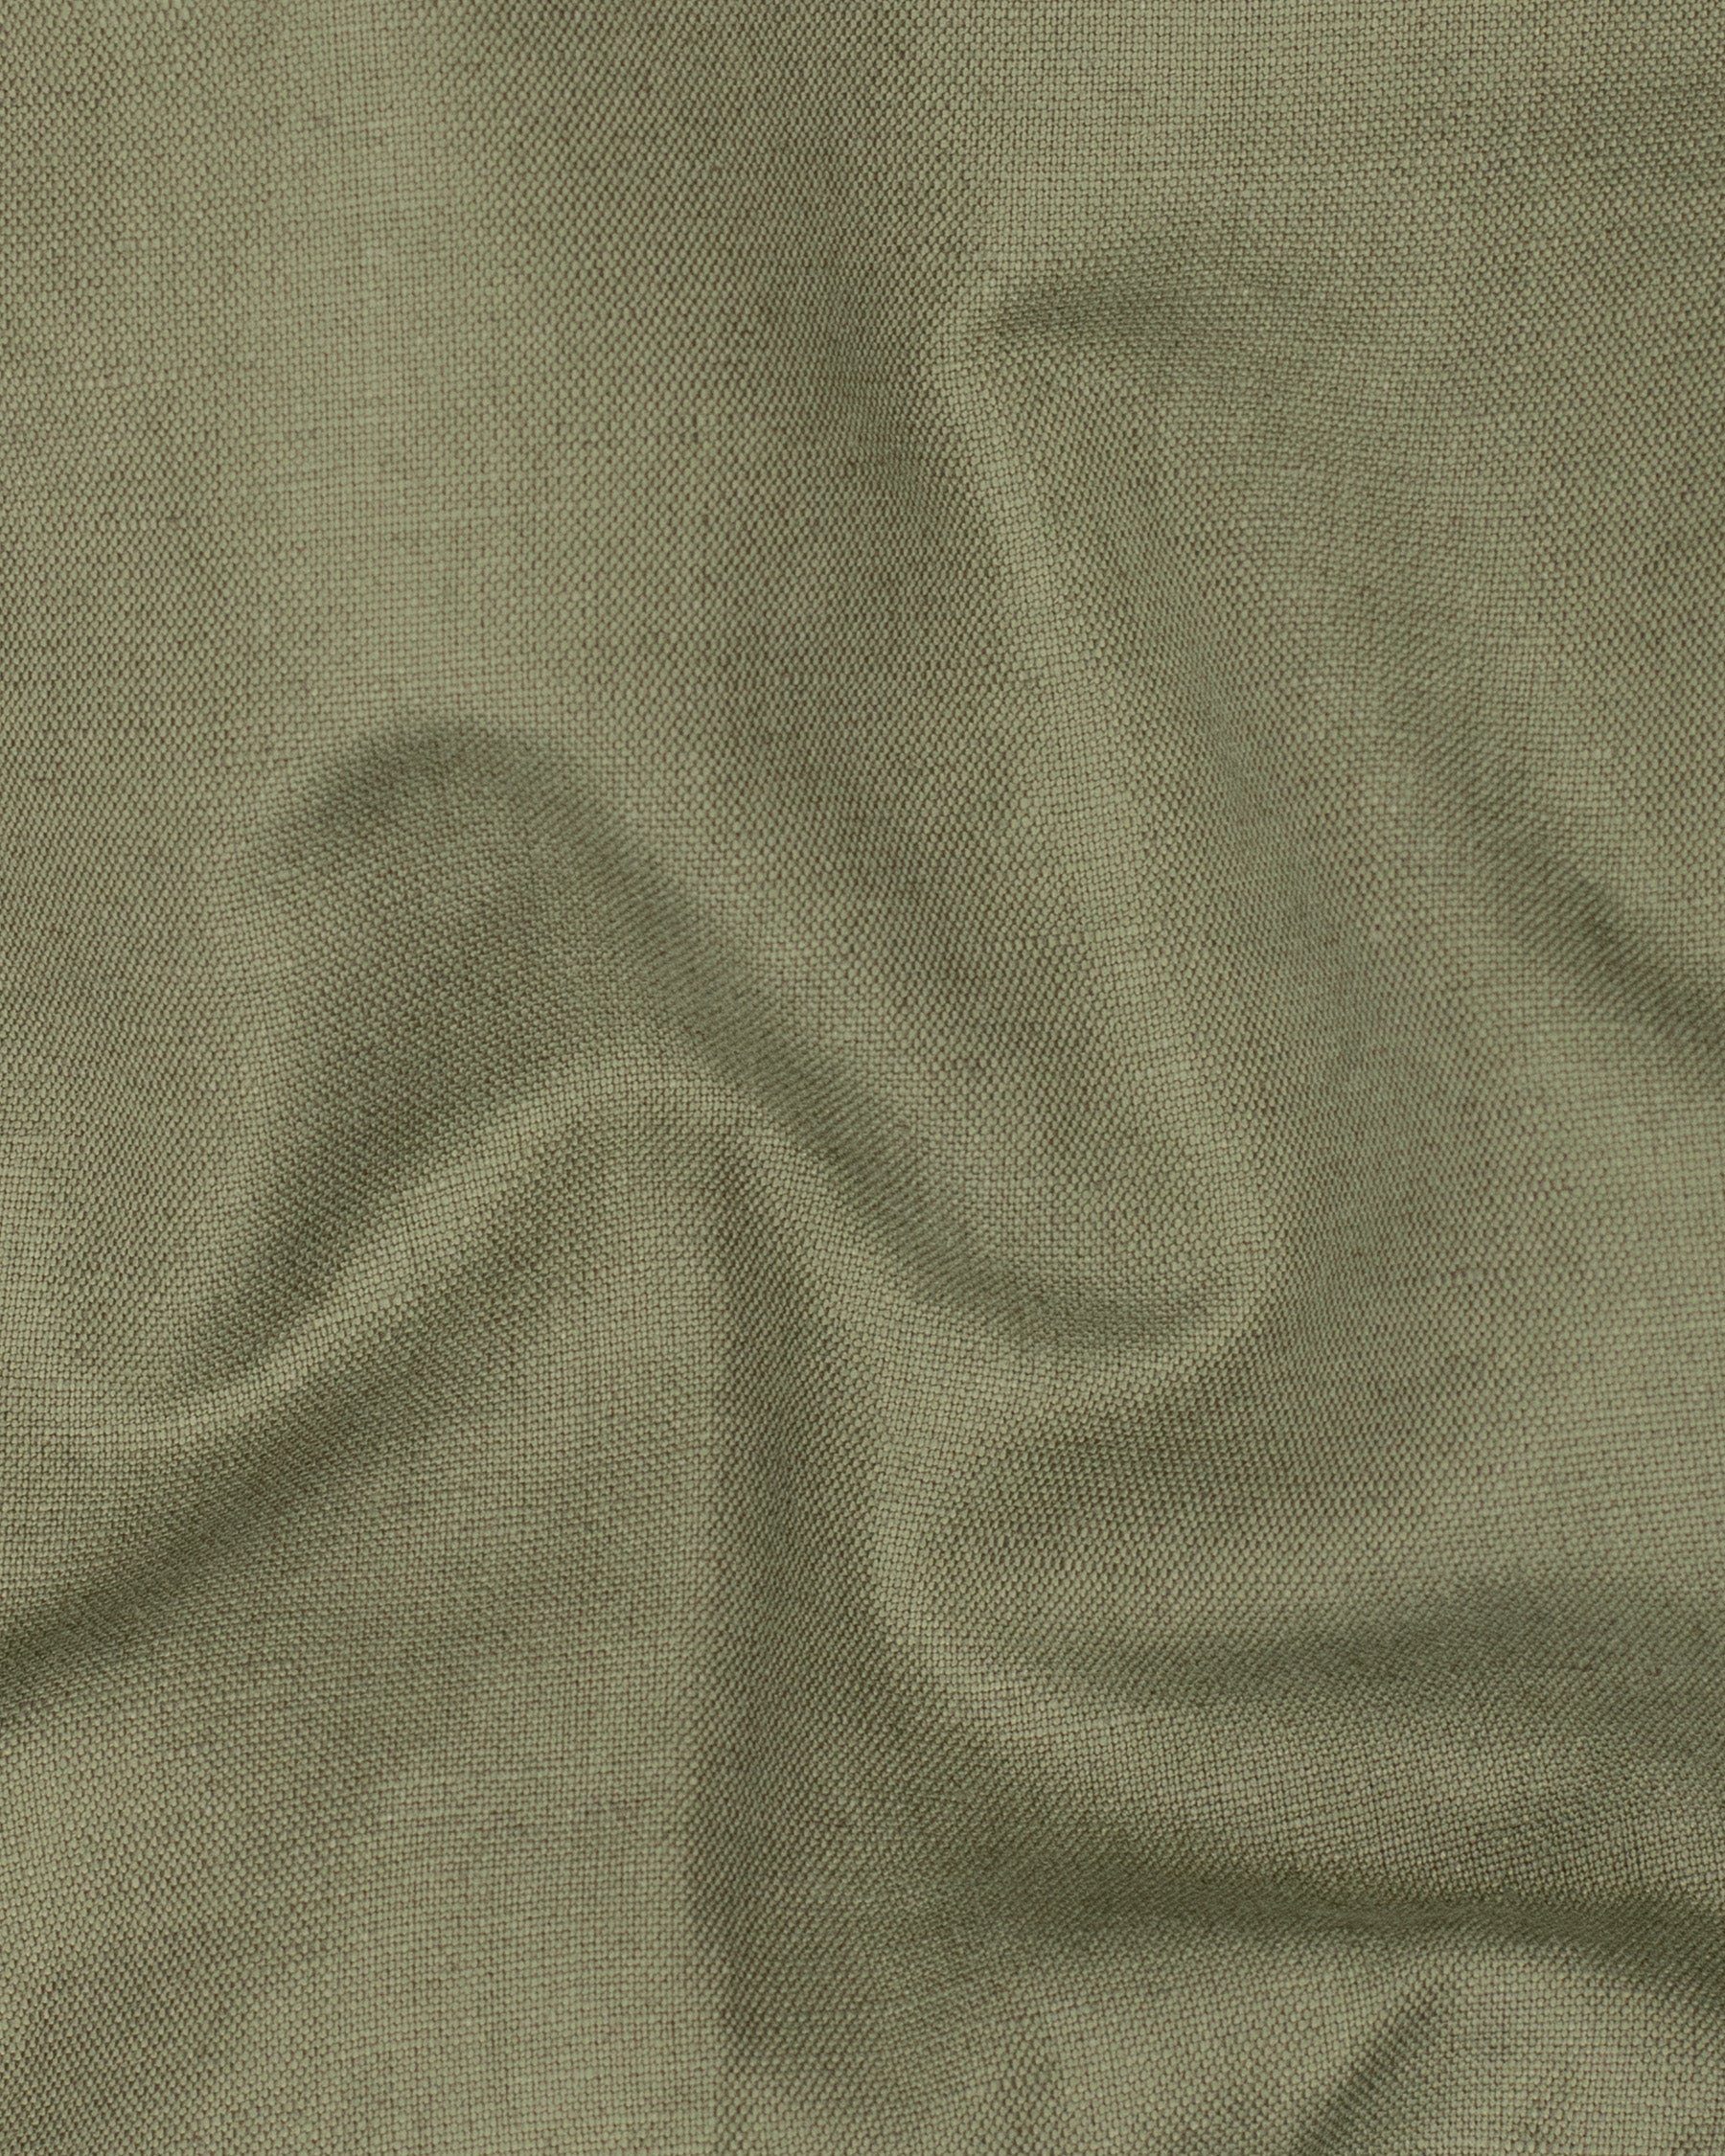 Granite Green Luxurious Linen Waistcoat